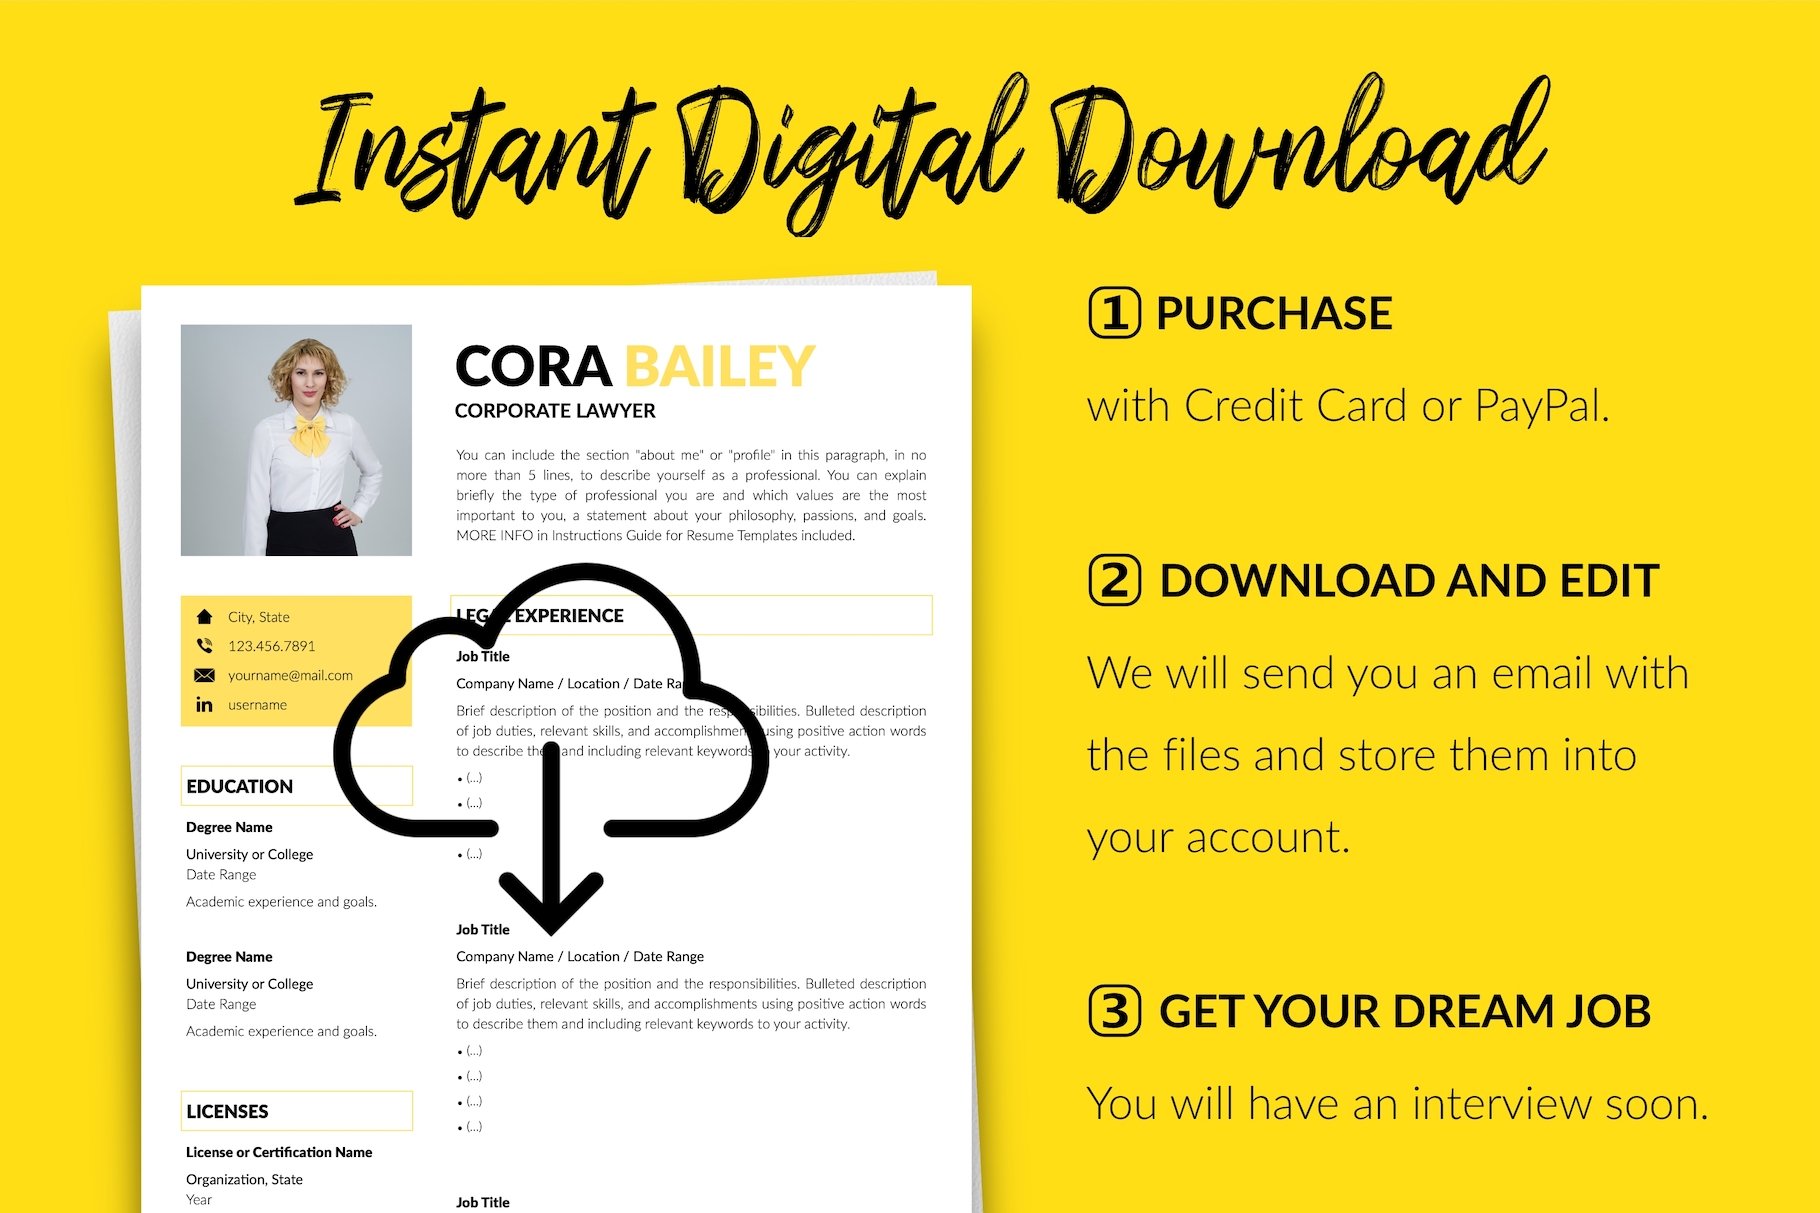 resume cv template cora bailey for creative market 14 instant digital download 218